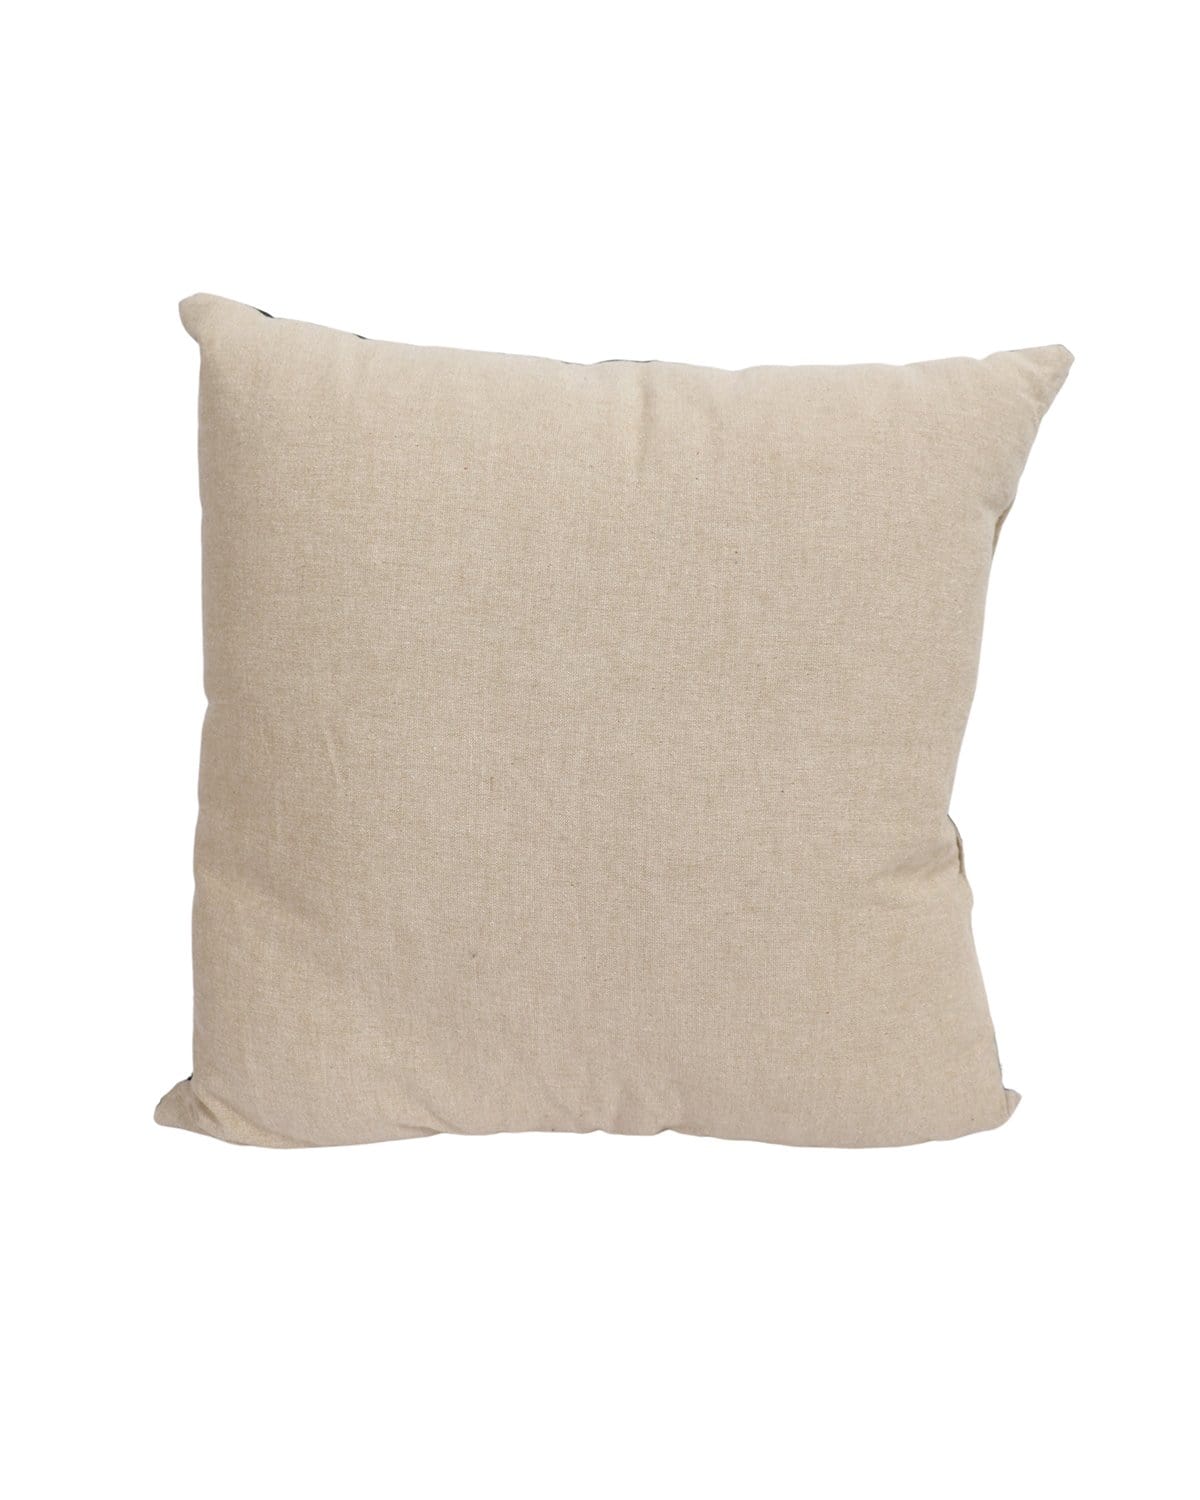 LACOURTE Pillows 51cm x 51cm / Black-Beige LACOURTE - Charleston Reversible Velvet Decorative Pillow